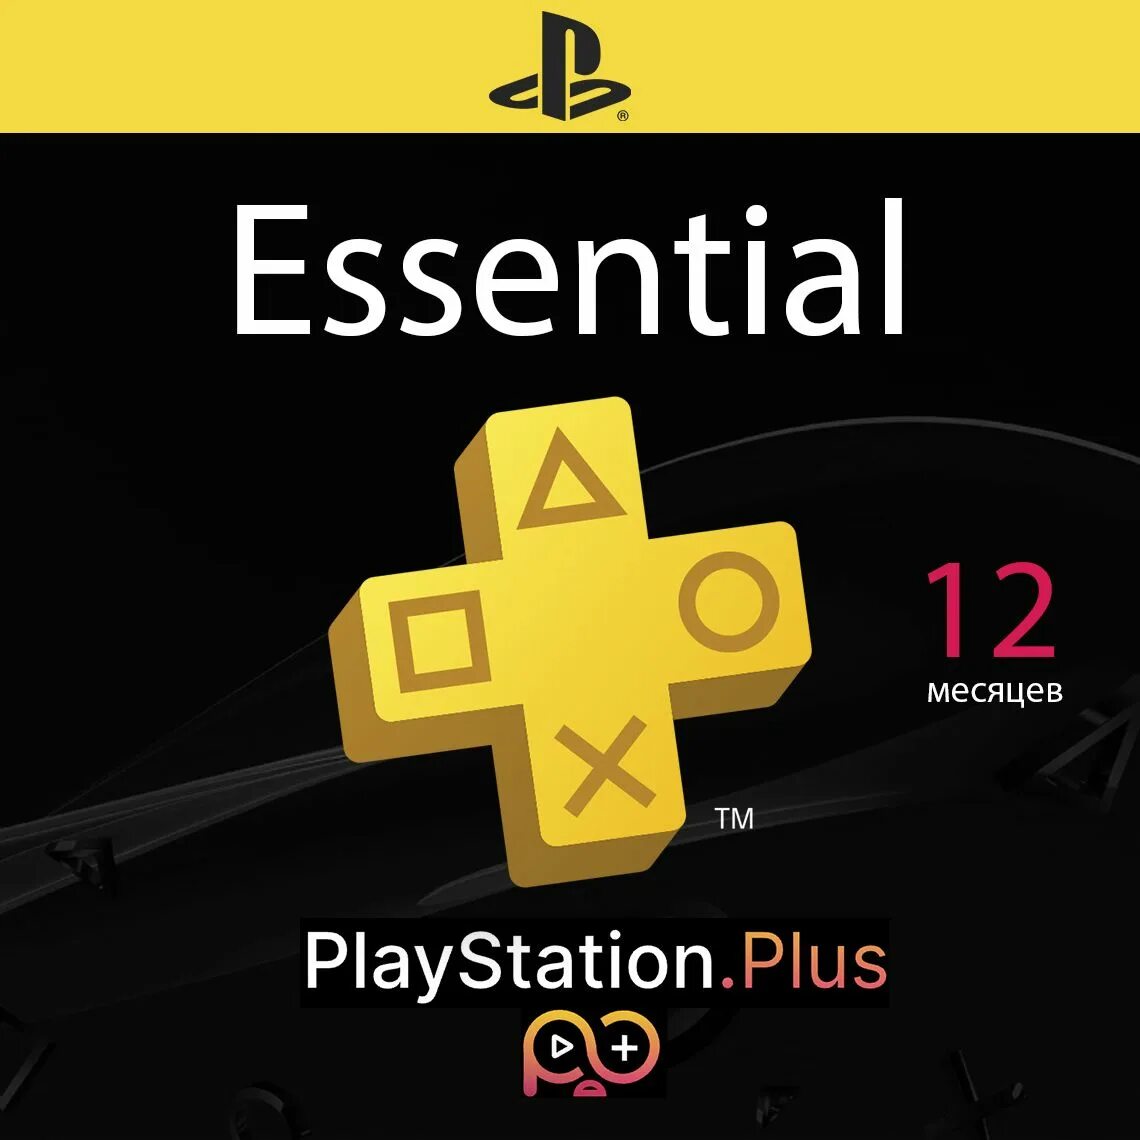 PLAYSTATION Plus Deluxe 12. PLAYSTATION Plus Essential. PLAYSTATION Plus Essential Extra Deluxe. Подписка PLAYSTATION Plus Essential на 1 месяц. Купить подписку делюкс